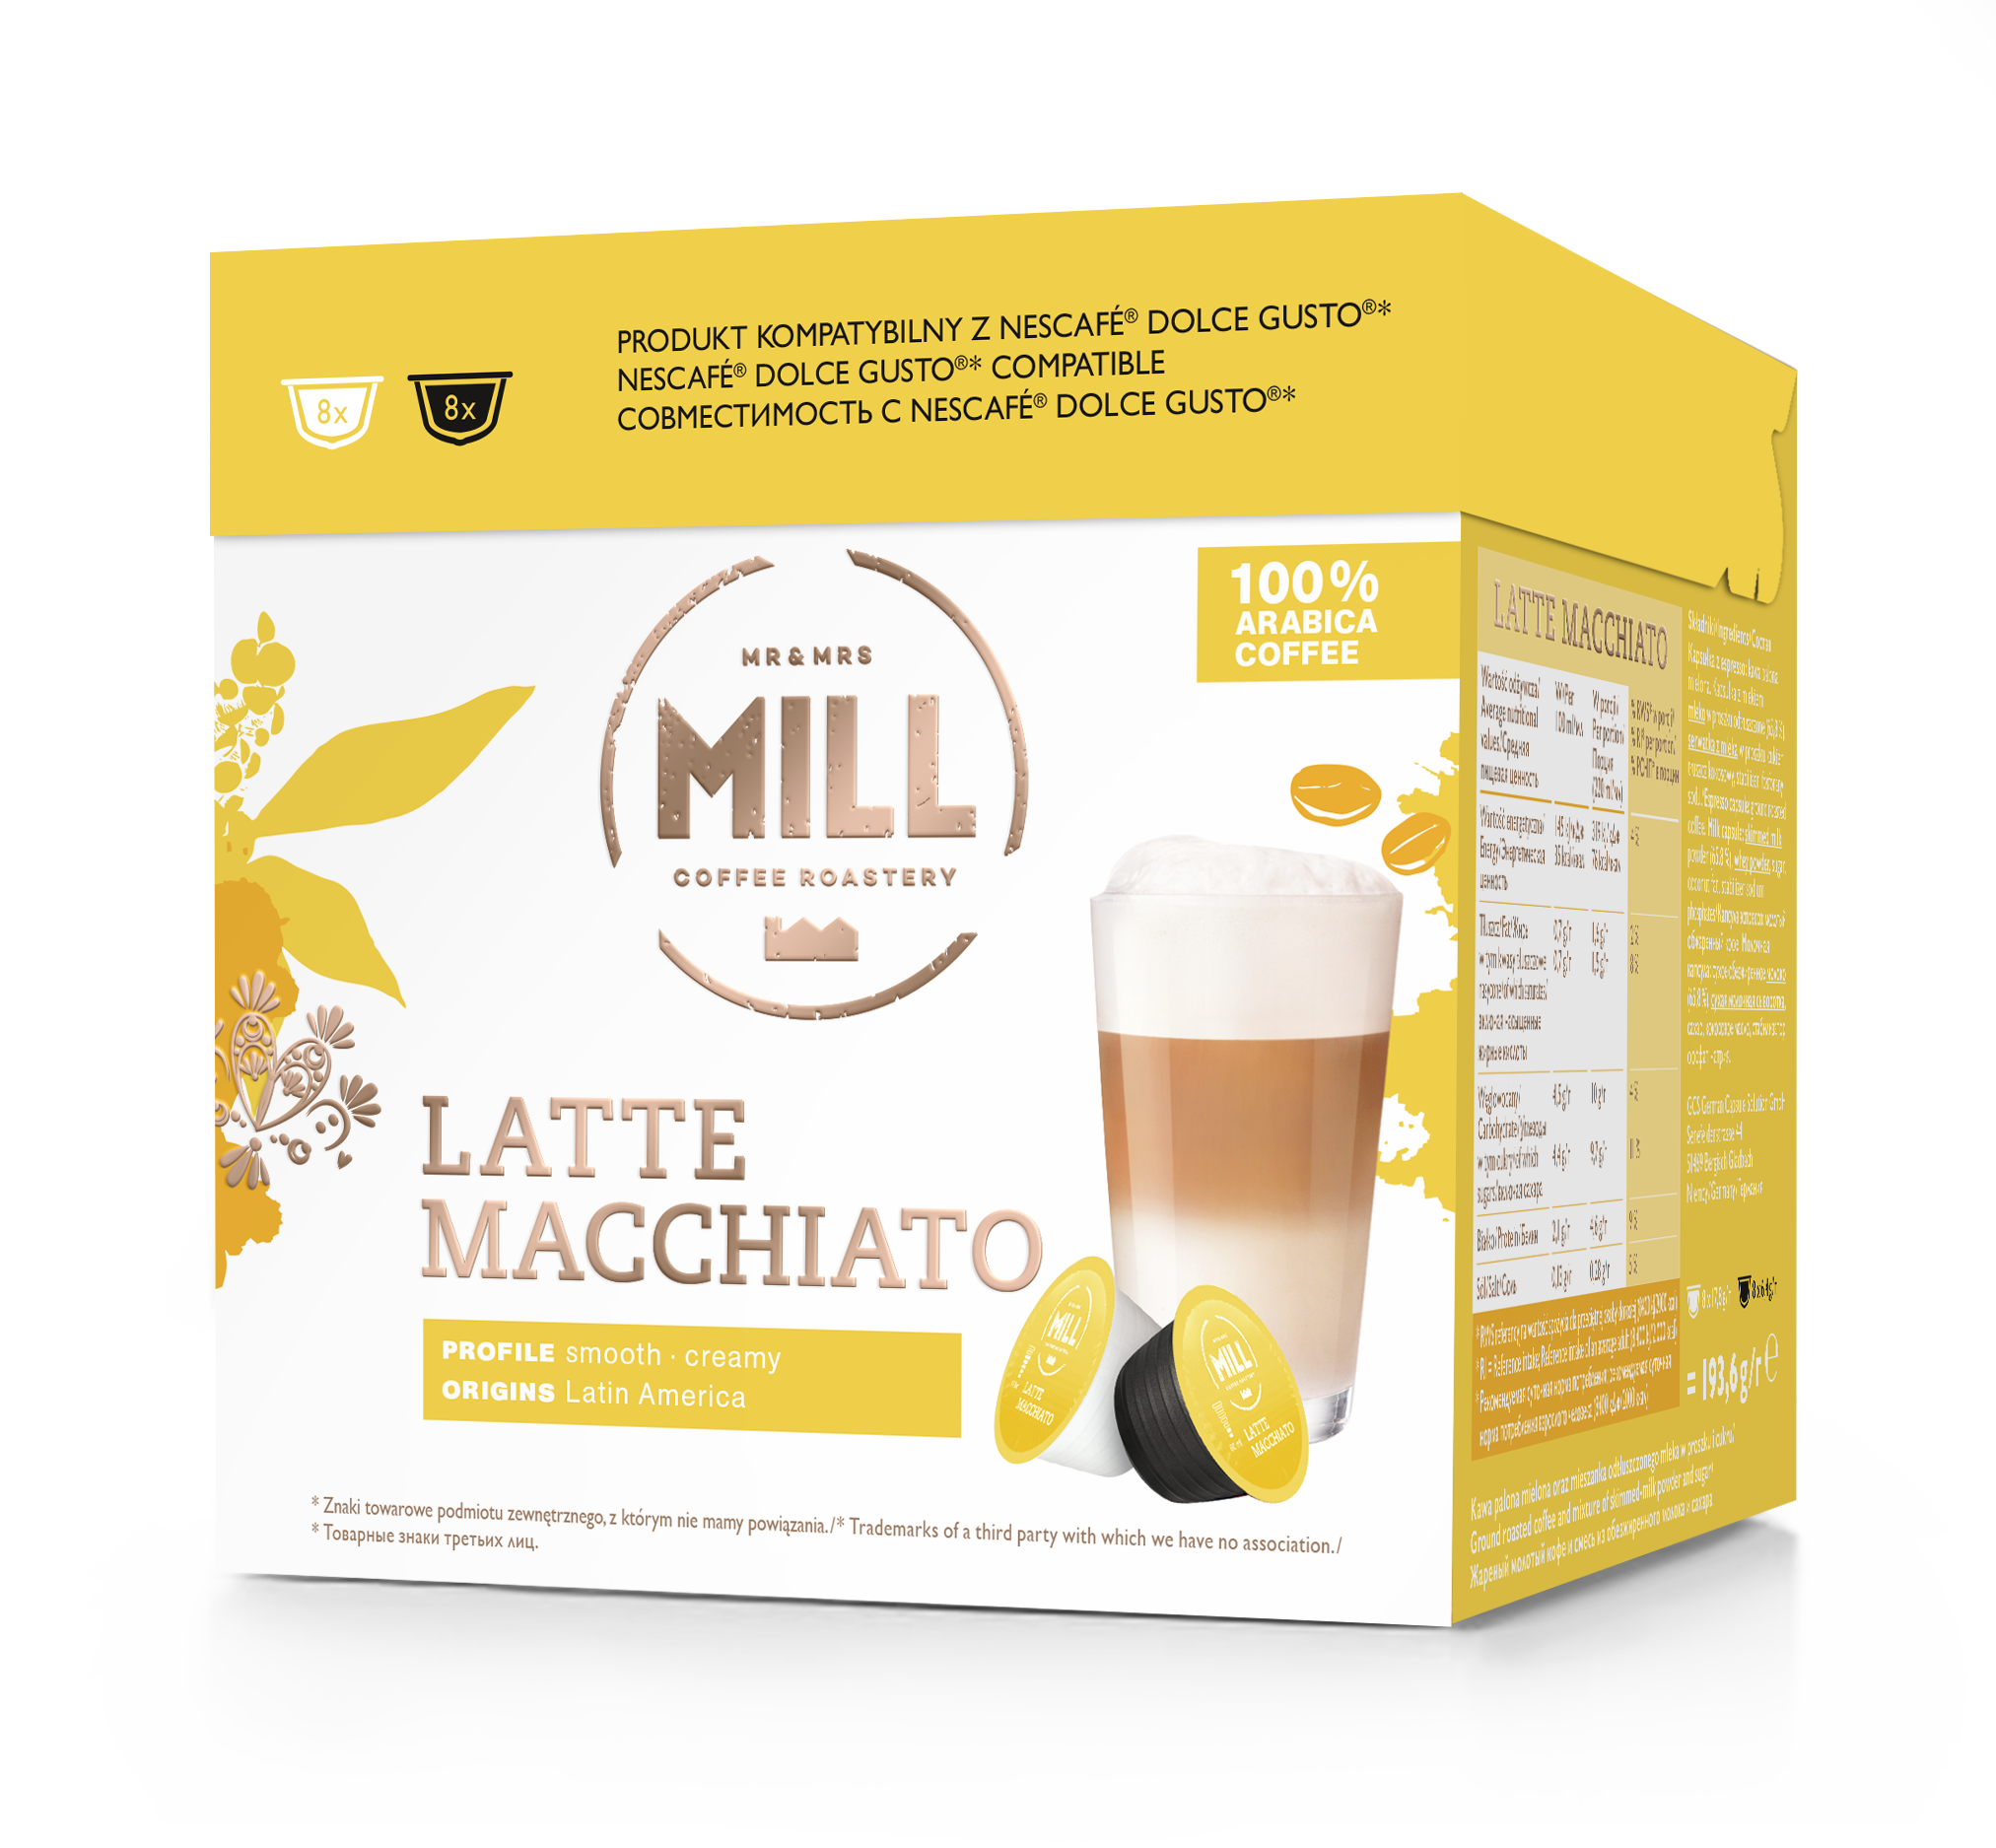 Mr&Mrs Mill Latte Macchiato coffee capsules, compatible with Dolce Gusto